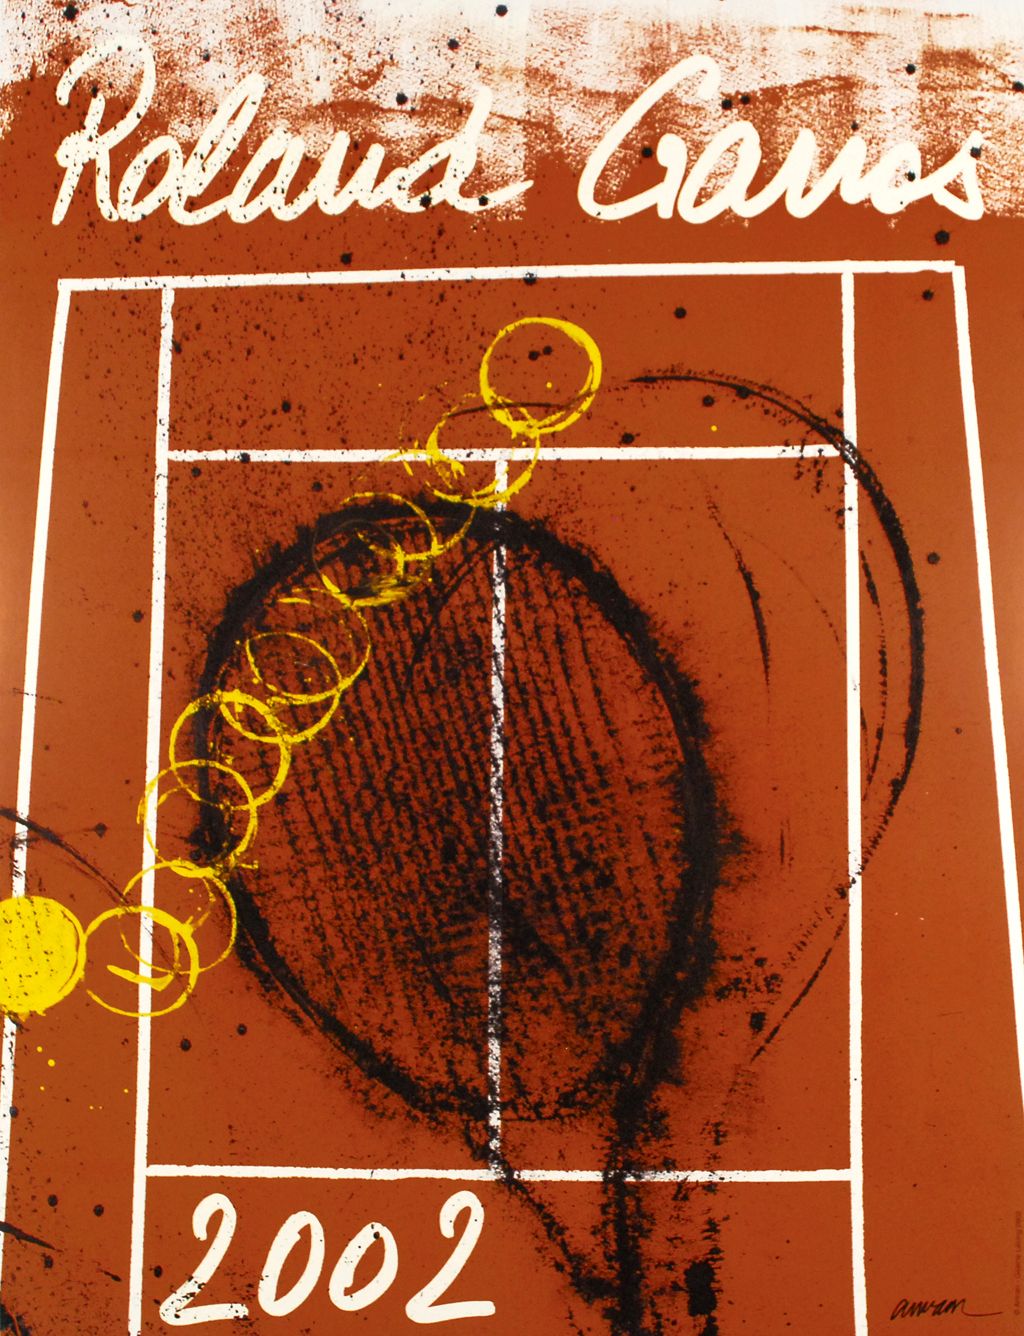 ARMAN 阿尔曼-费尔南德斯 (1928 - 2005)

罗兰-加洛斯，2002年

由Galerie Lelong编辑的胶印海报，并在版心右下方签名。

&hellip;